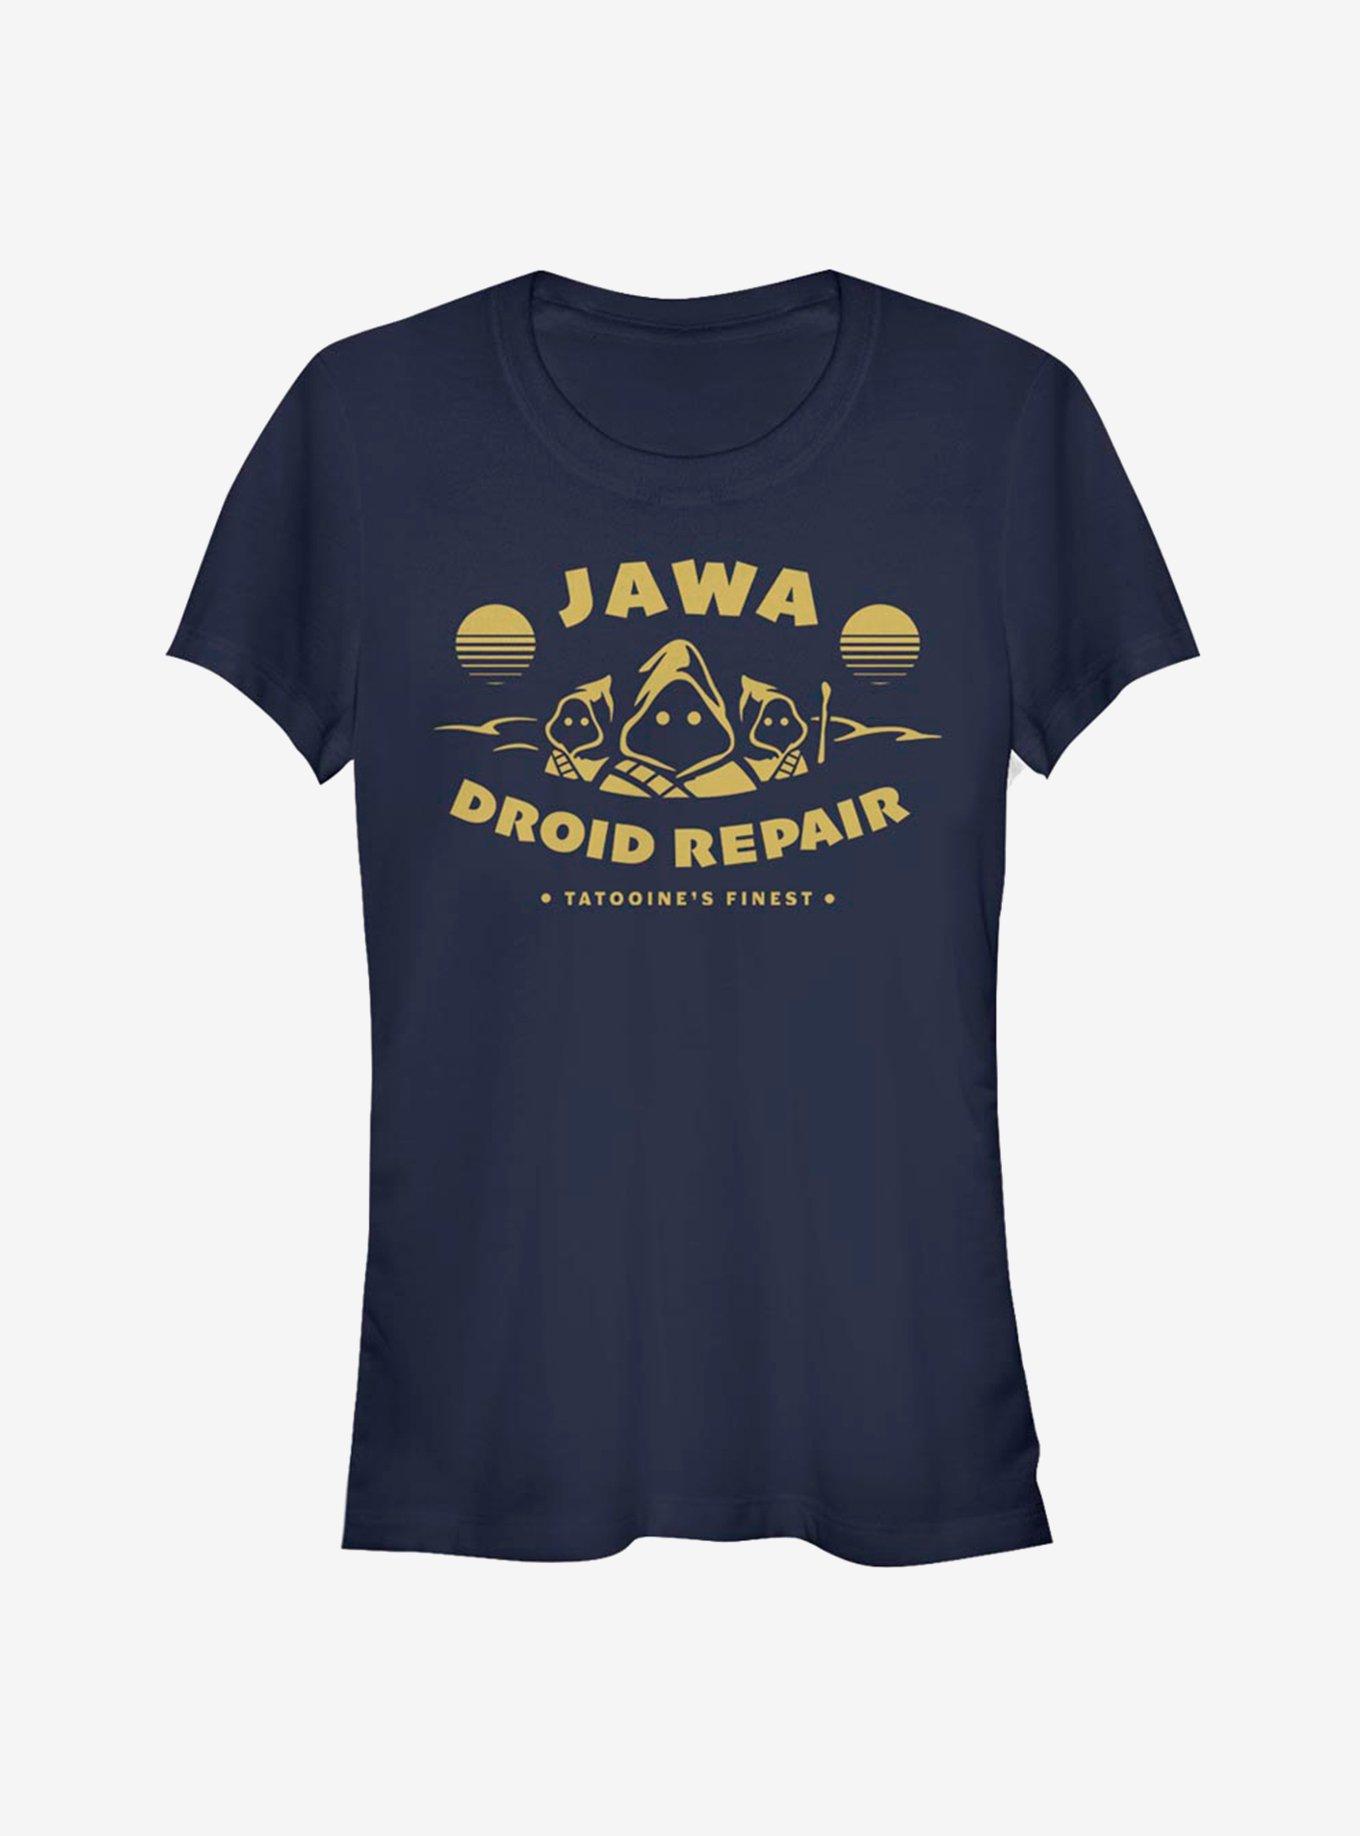 Star Wars Jawa Repair Girls T-Shirt, NAVY, hi-res